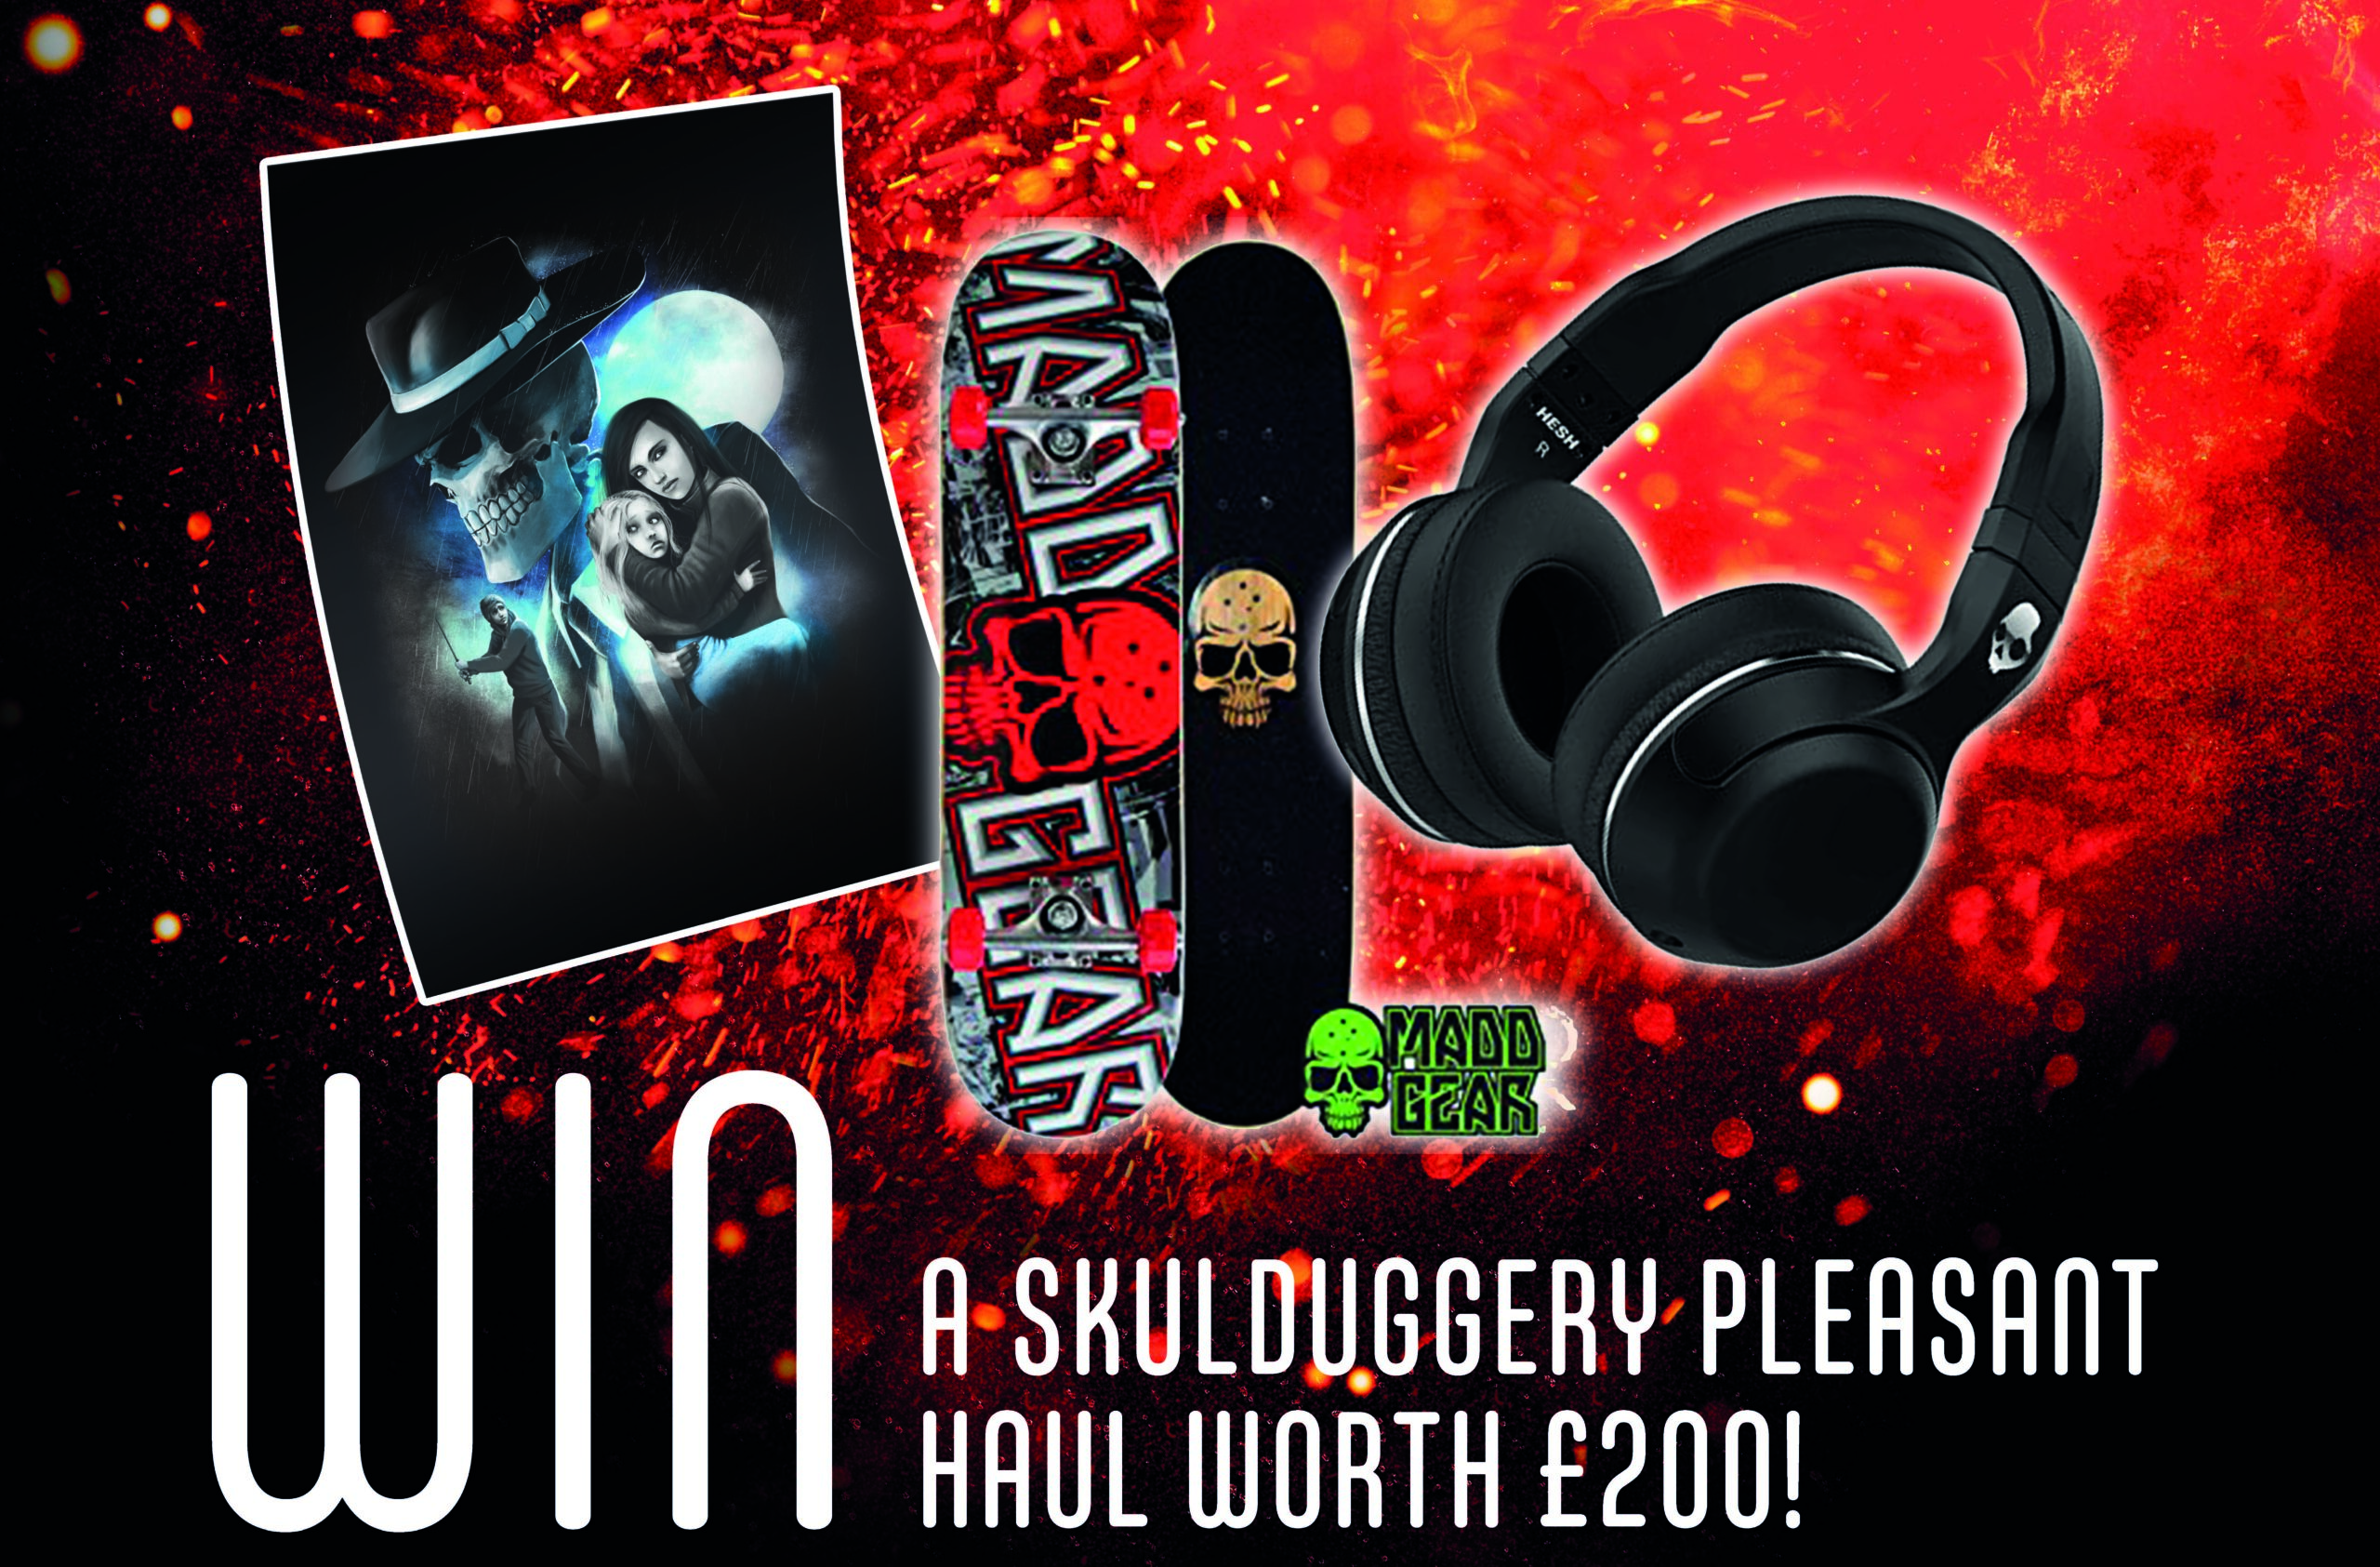 Win a Skulduggery Pleasant haul worth £200!